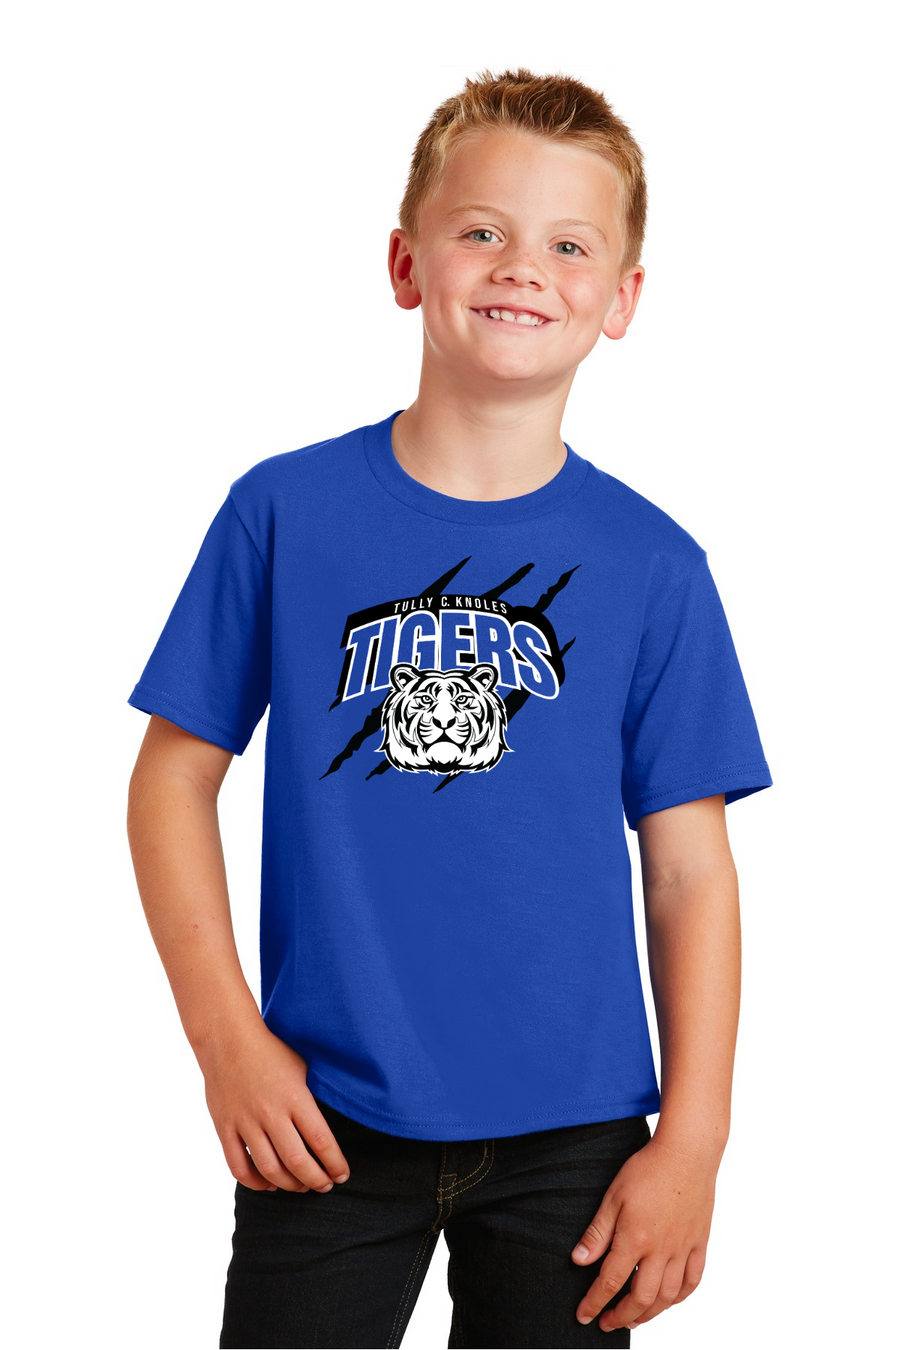 Tully C Knoles - Spirit Wear 23/24 On-Demand-Premium Soft Unisex T-Shirt Tiger Logo